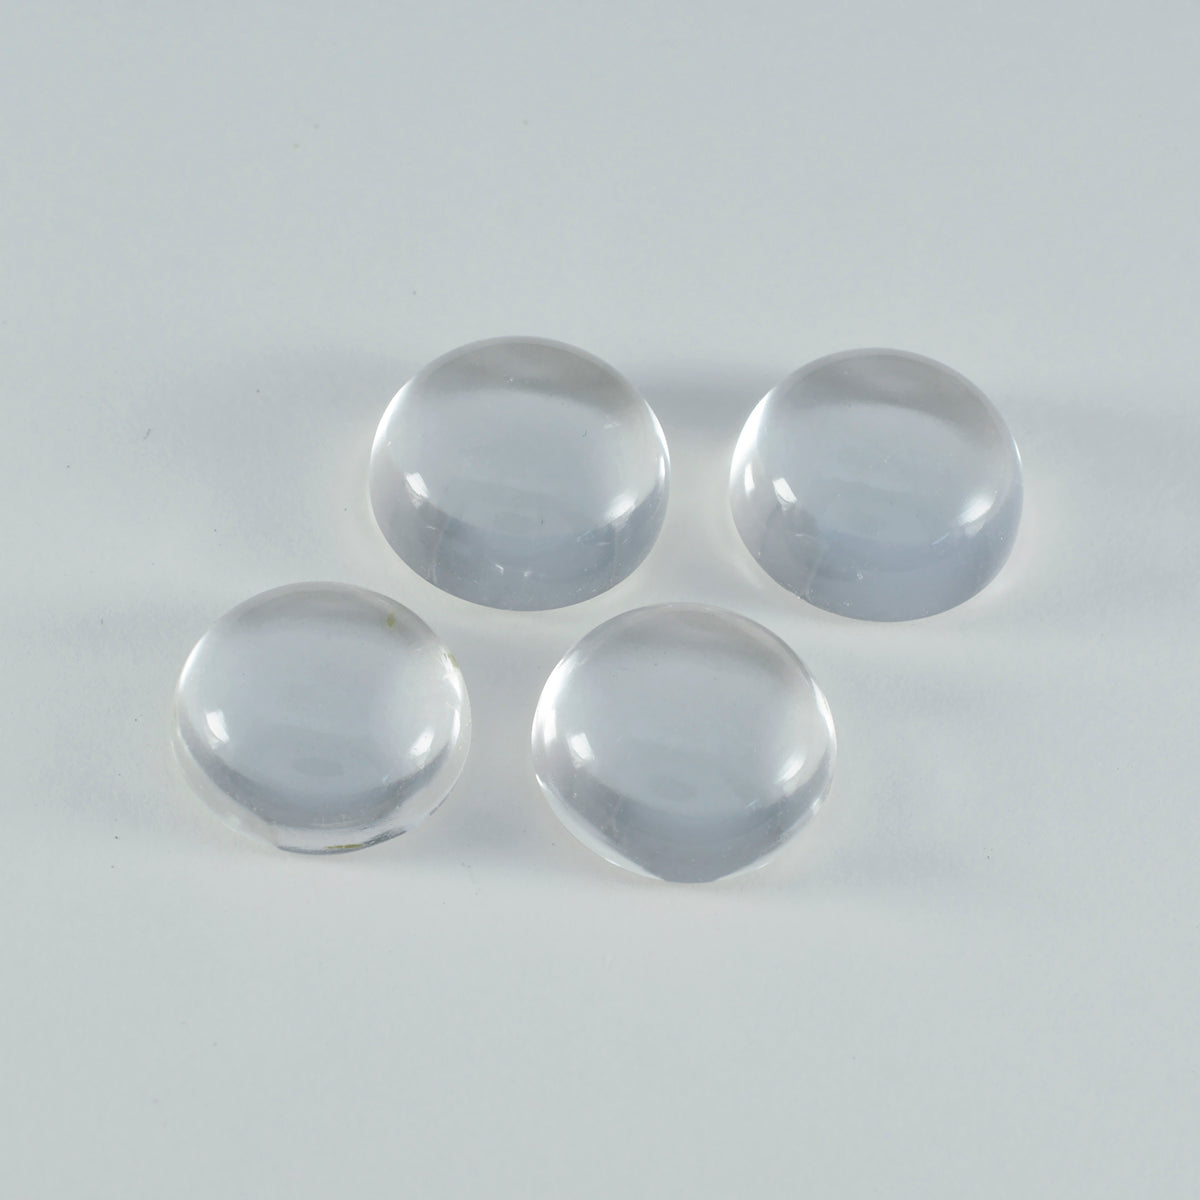 riyogems 1 шт., кабошон из белого кристалла кварца 14x14 мм, круглая форма, красивое качество, свободный драгоценный камень